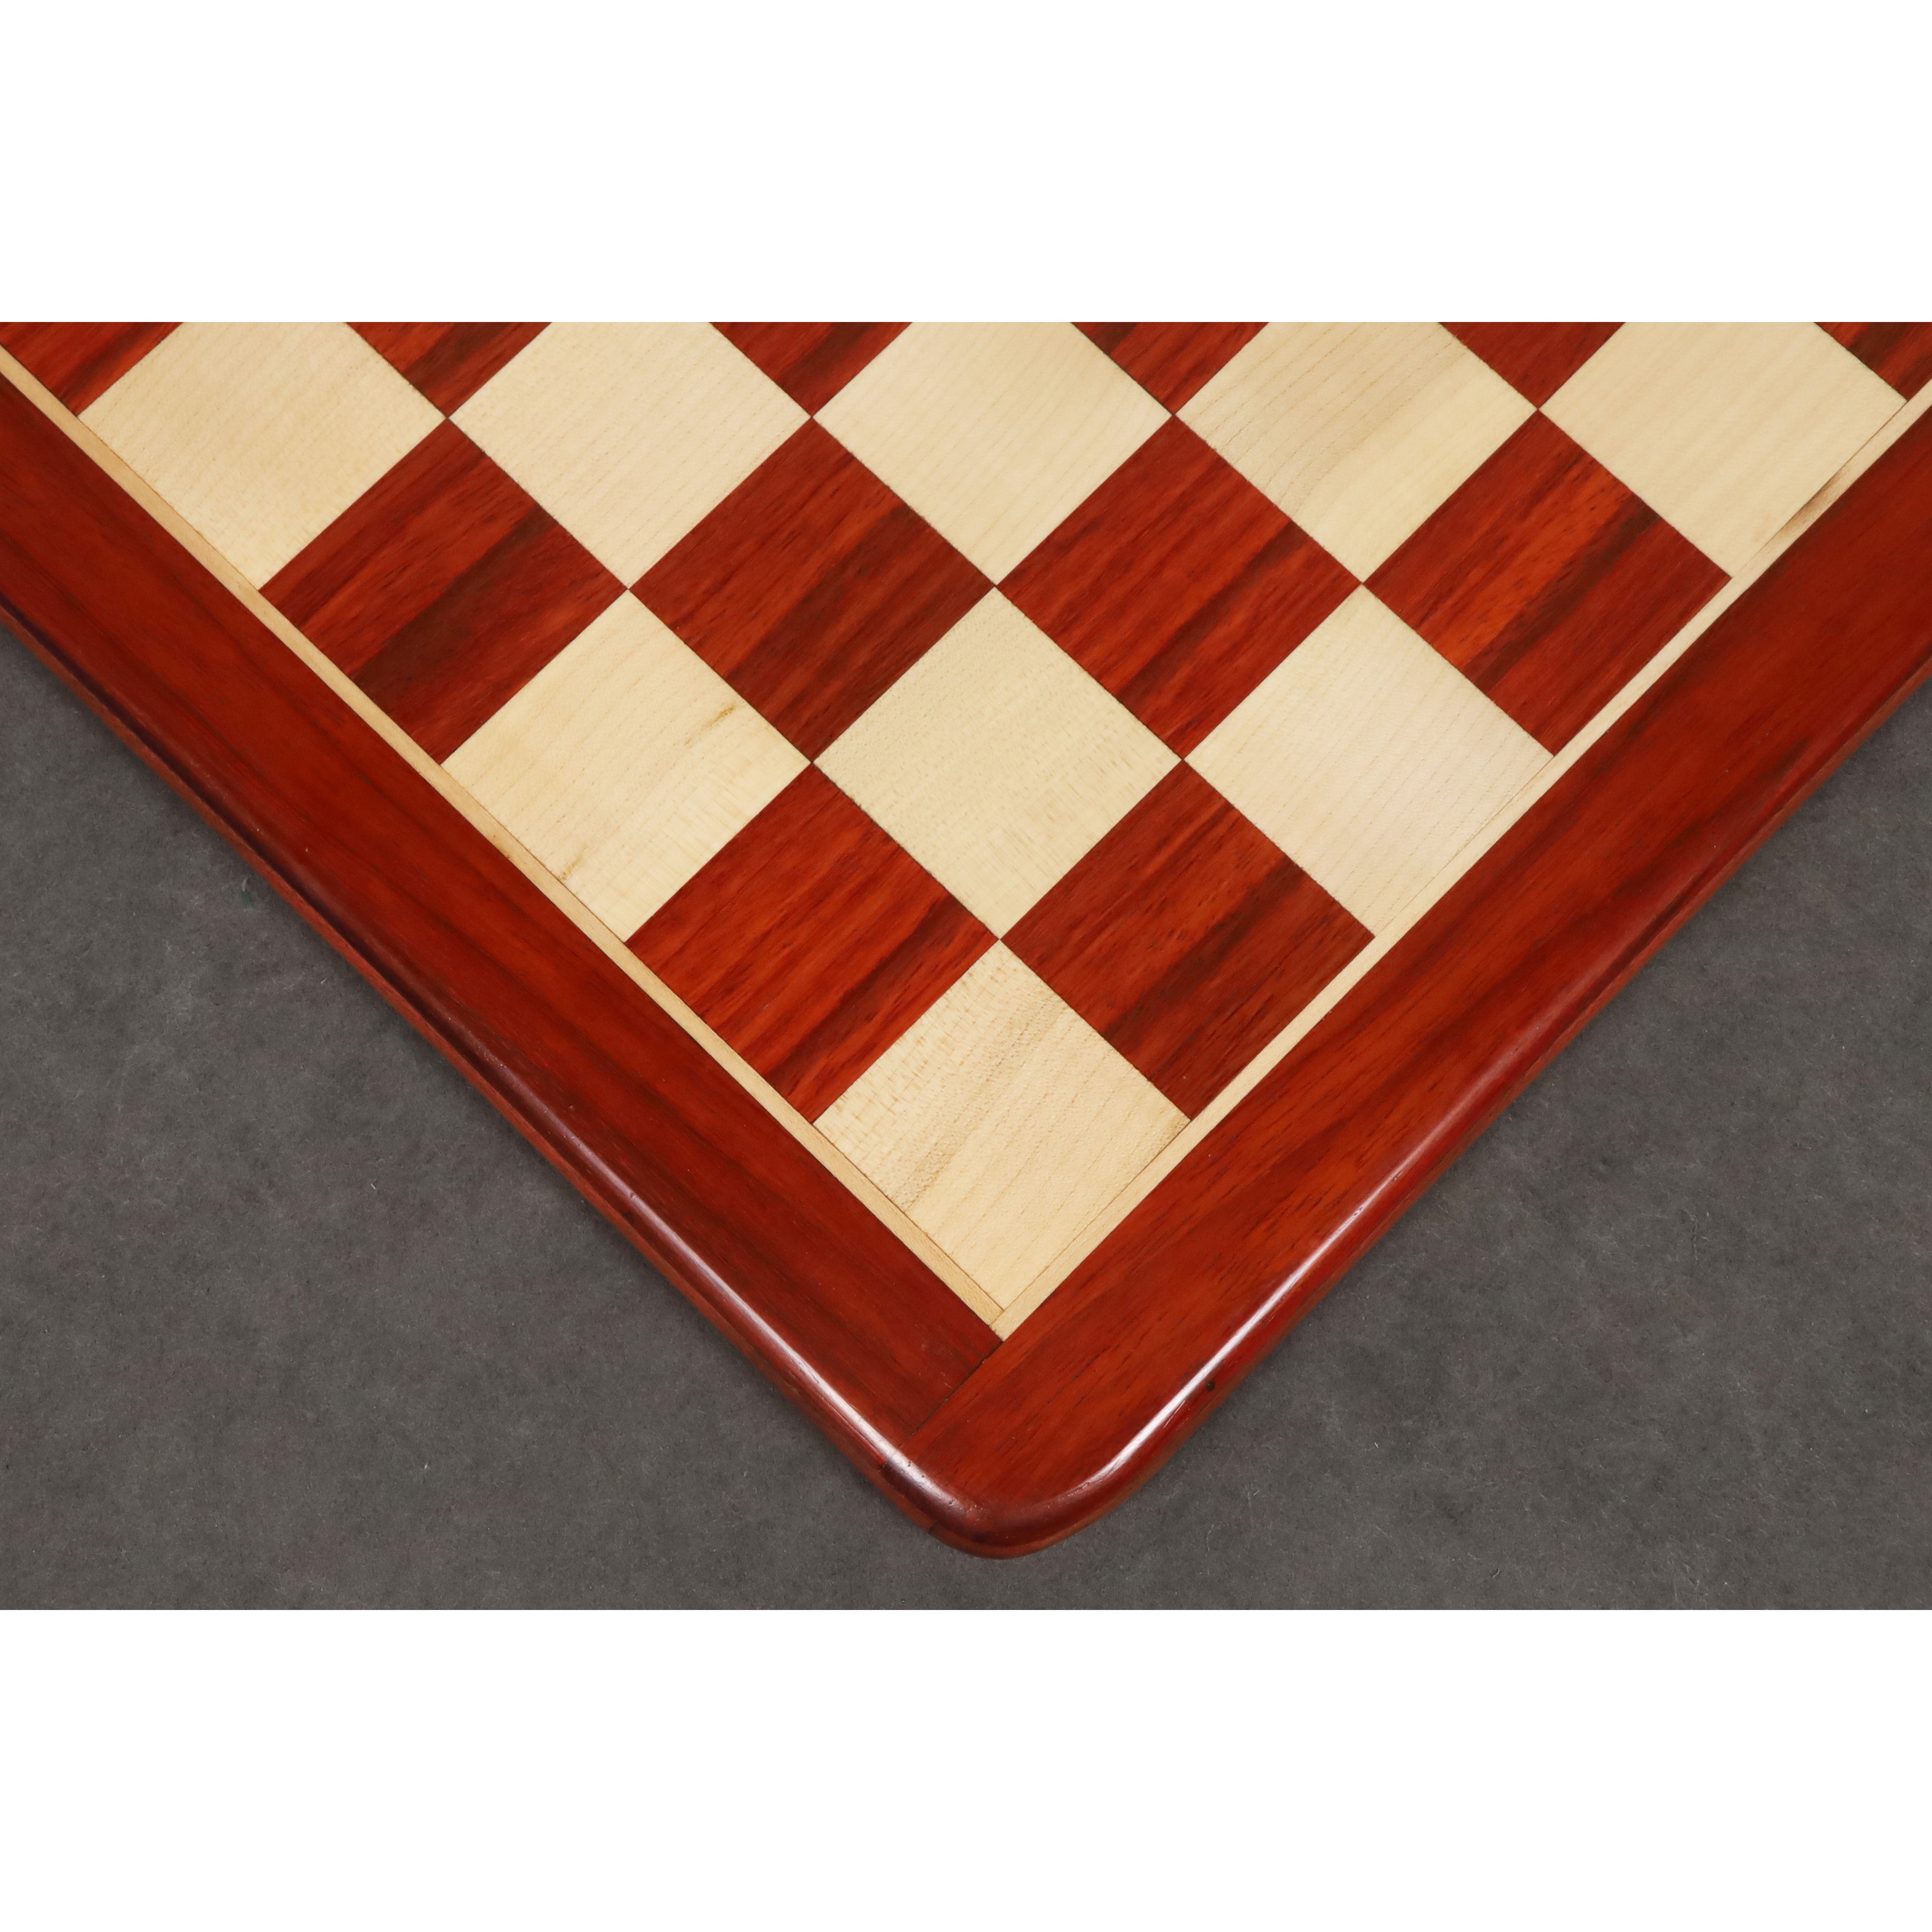 19" Bud Rosewood & Maple Wood Chess board | Flat Chess Board